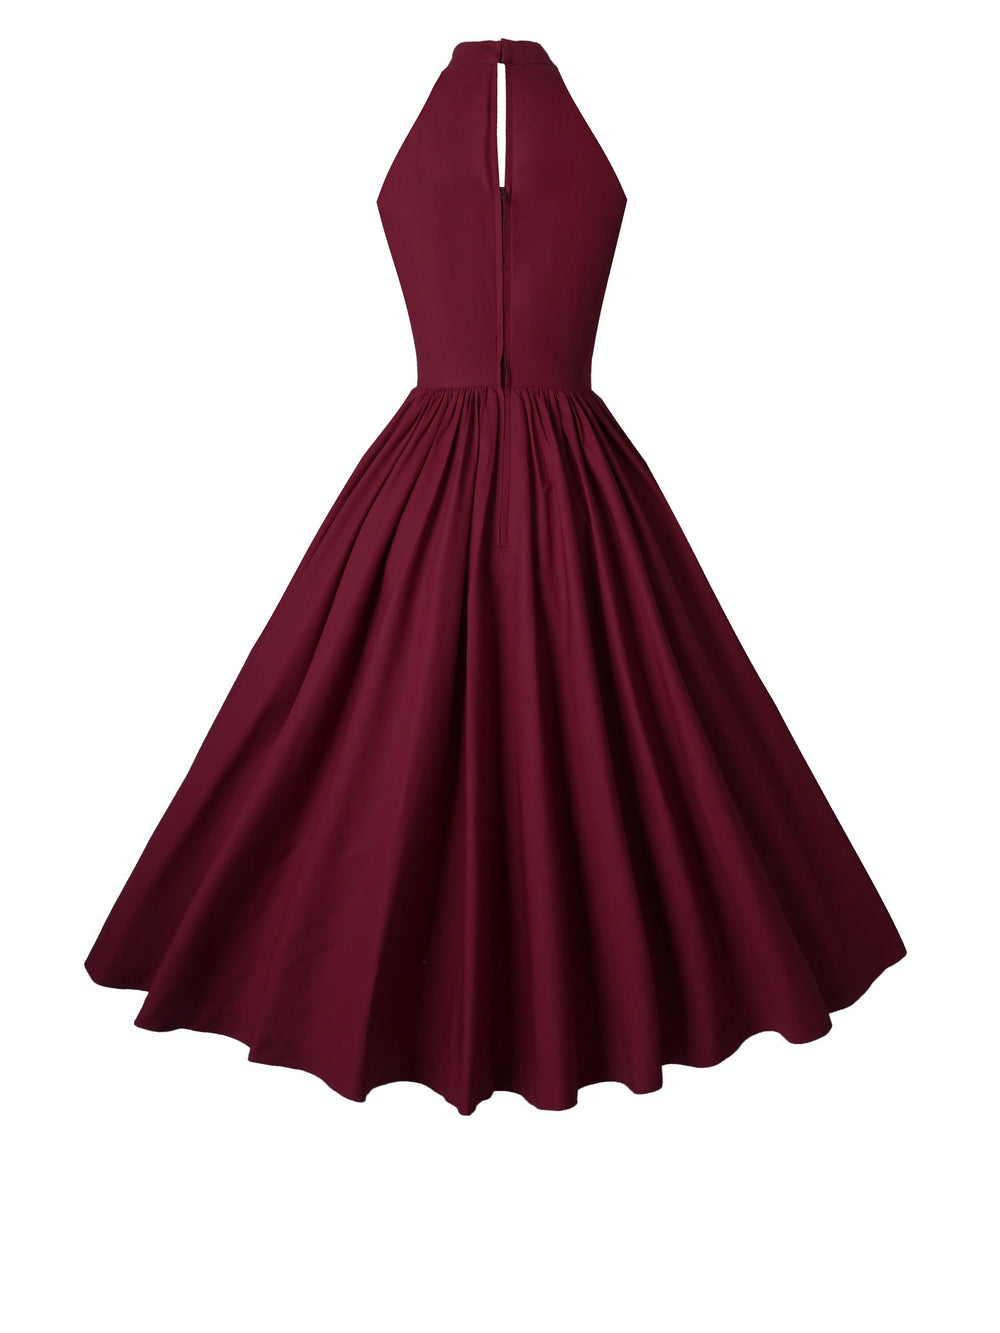 RTS - Size S - Rita Dress in Burgundy Cotton